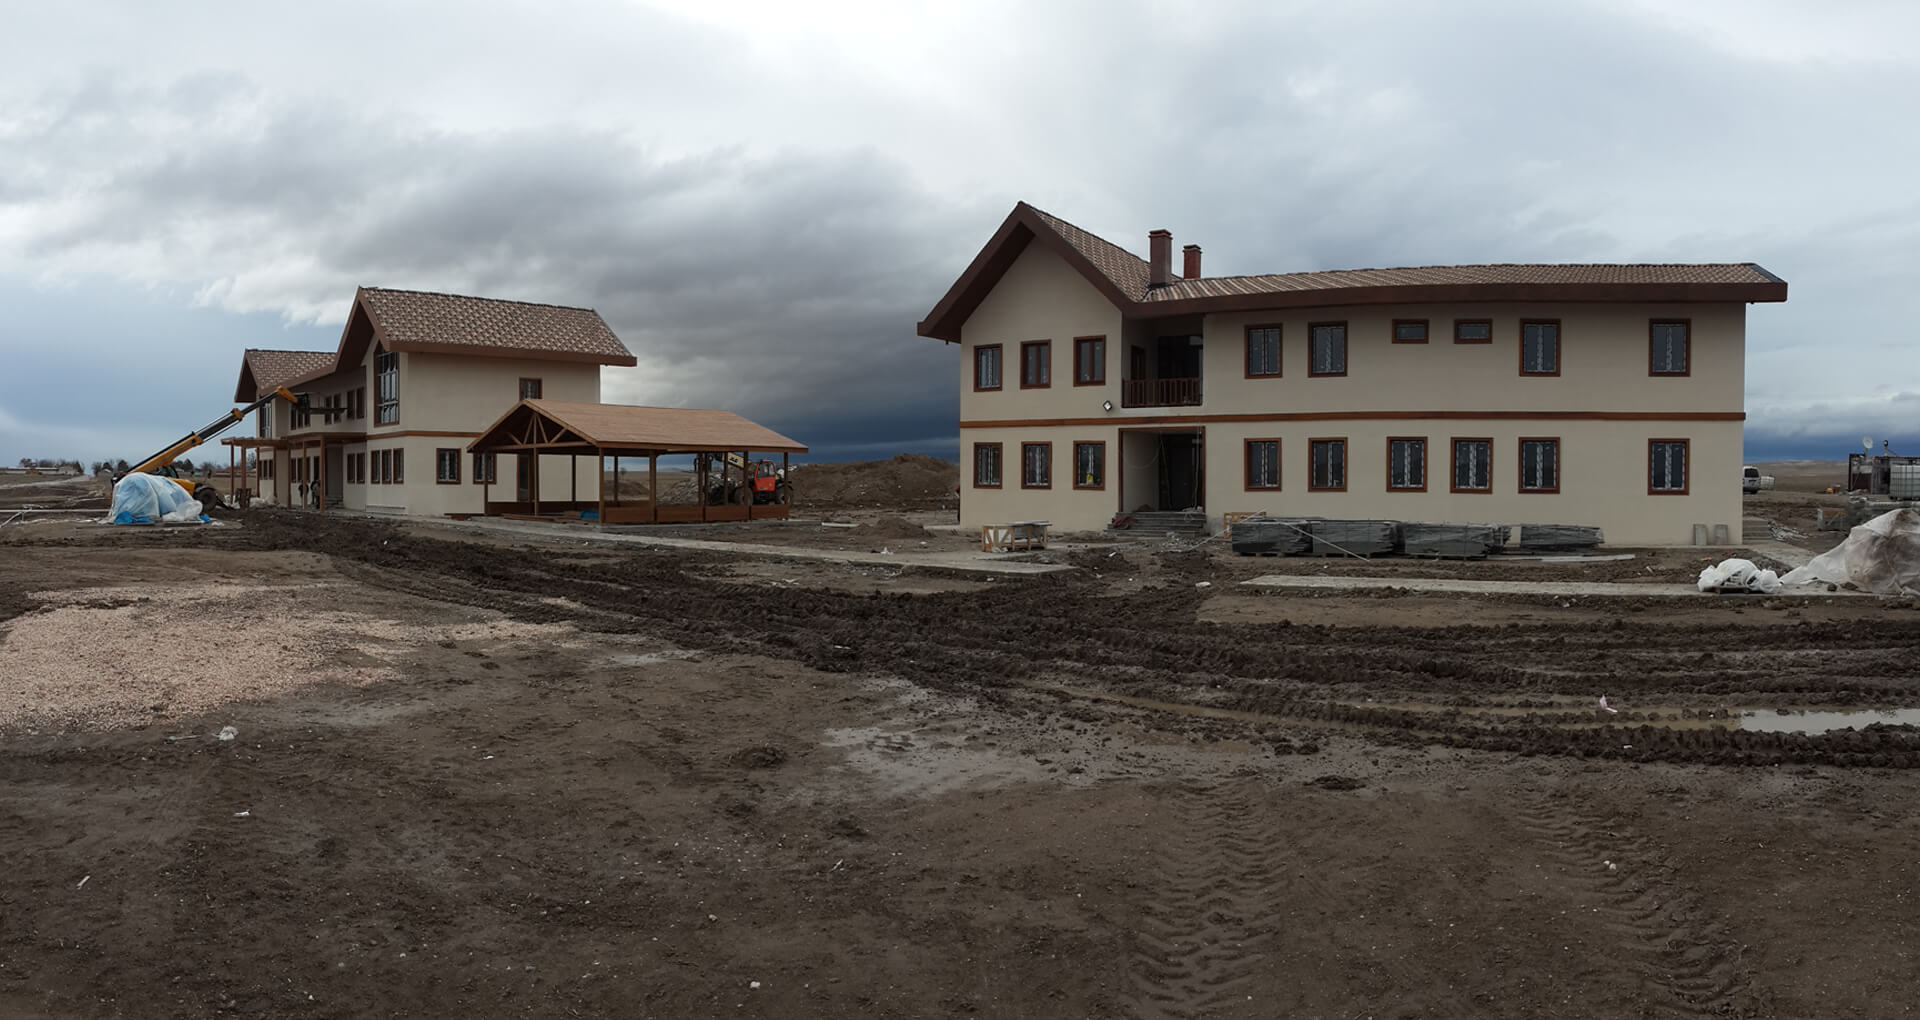 Adatarım Farm Administrative and Accommodation Buildings